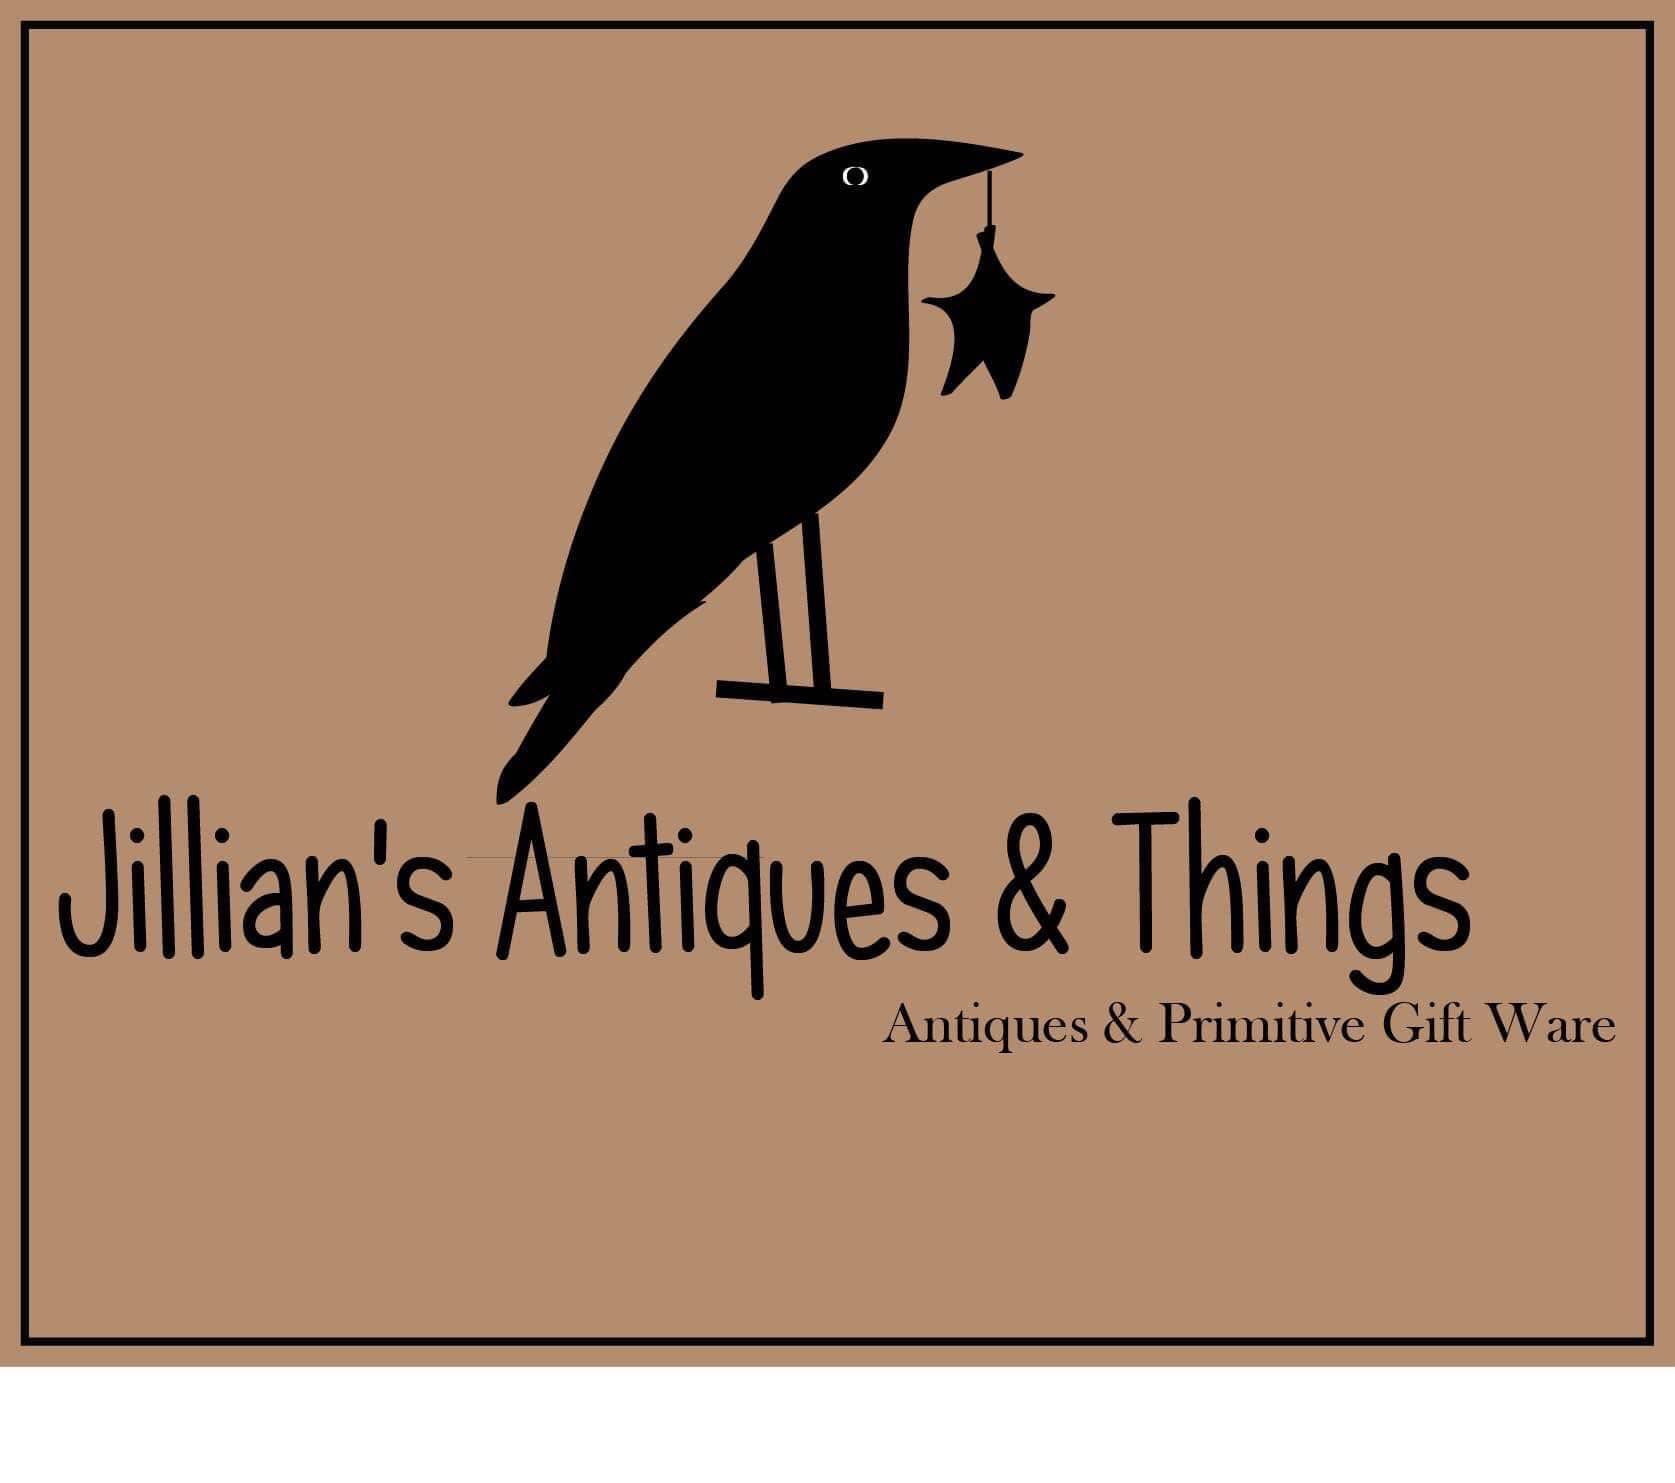 Jillian's Antiques & Things